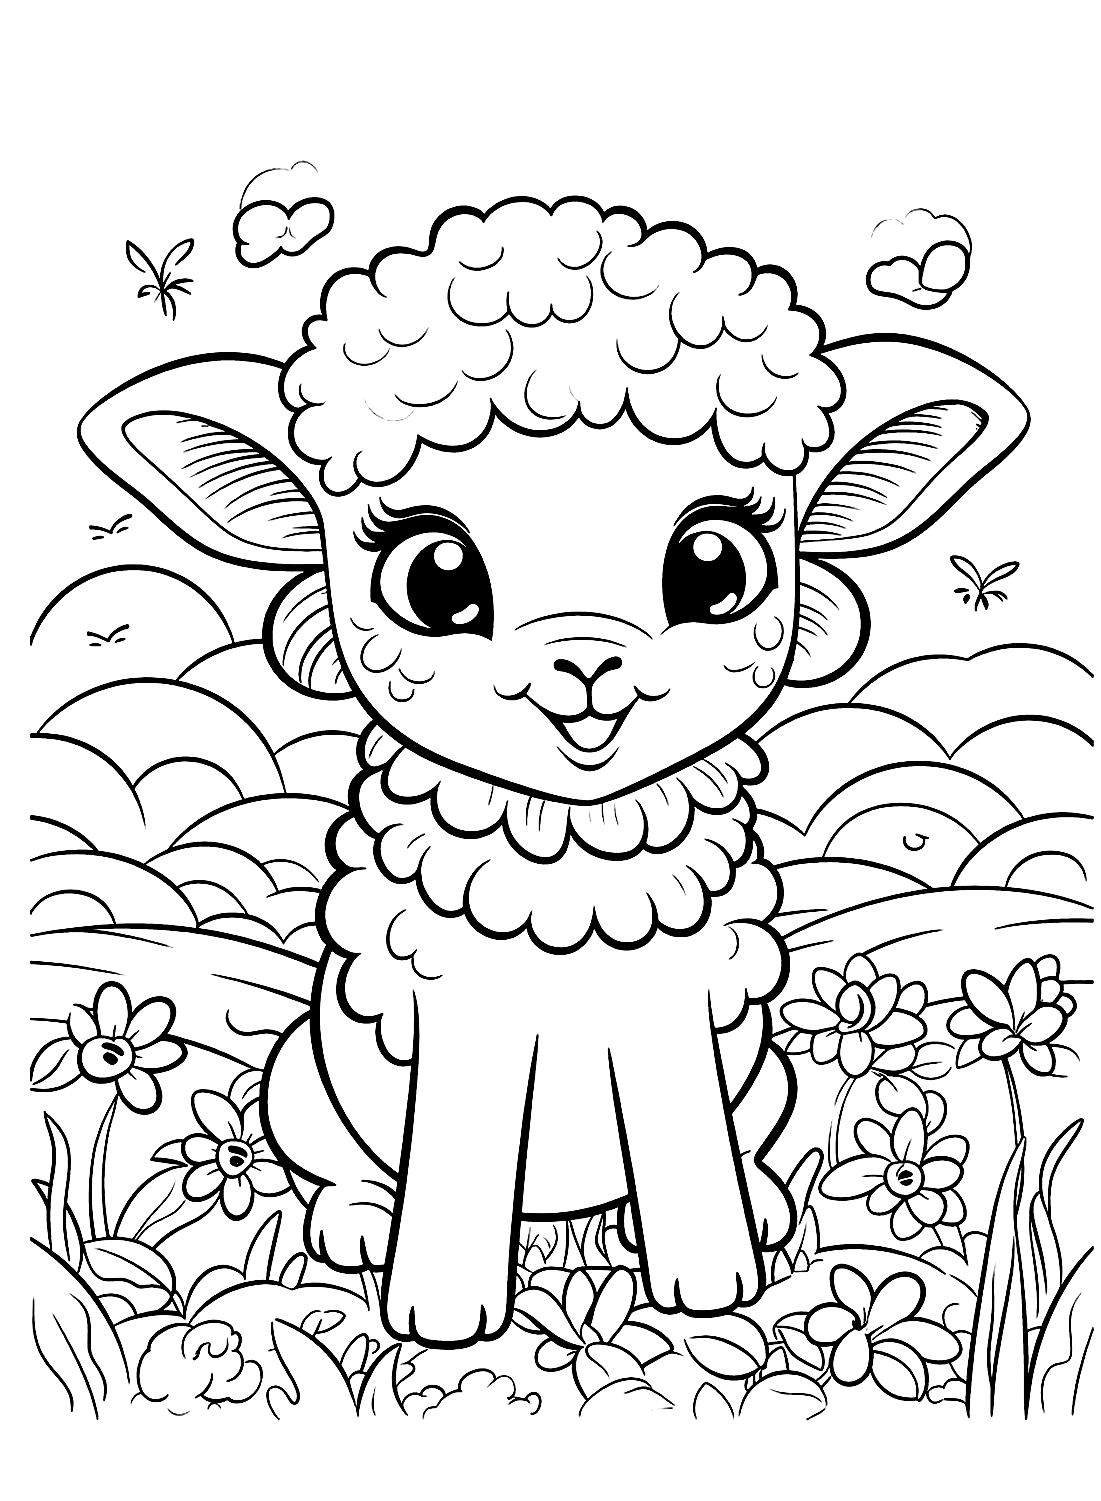 A Beautiful Sheep Coloring Page